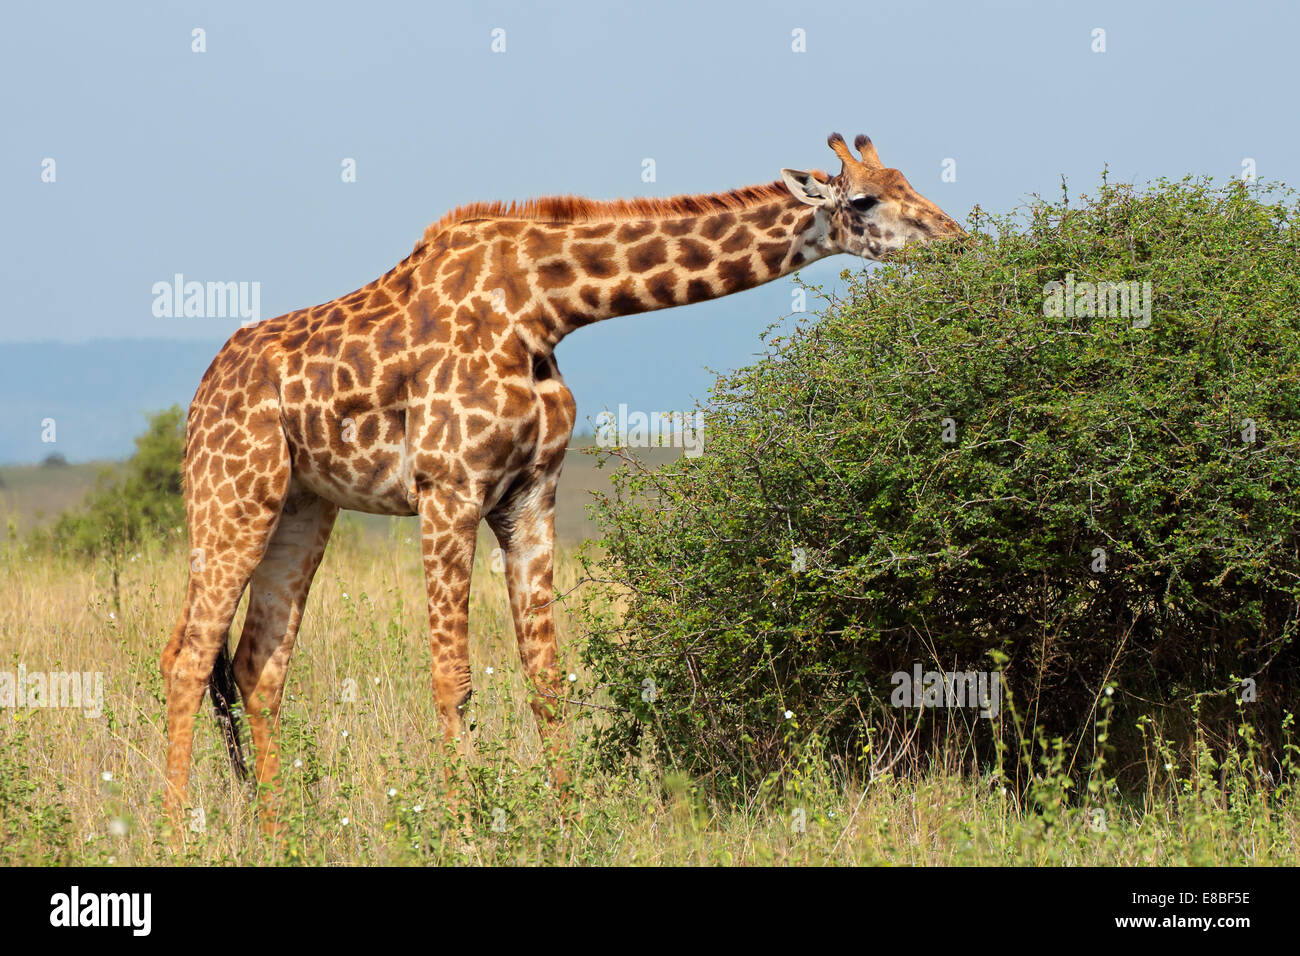 Masai UNE Girafe (Giraffa camelopardalis tippelskirchi) se nourrissant d'un arbre, au Kenya Banque D'Images